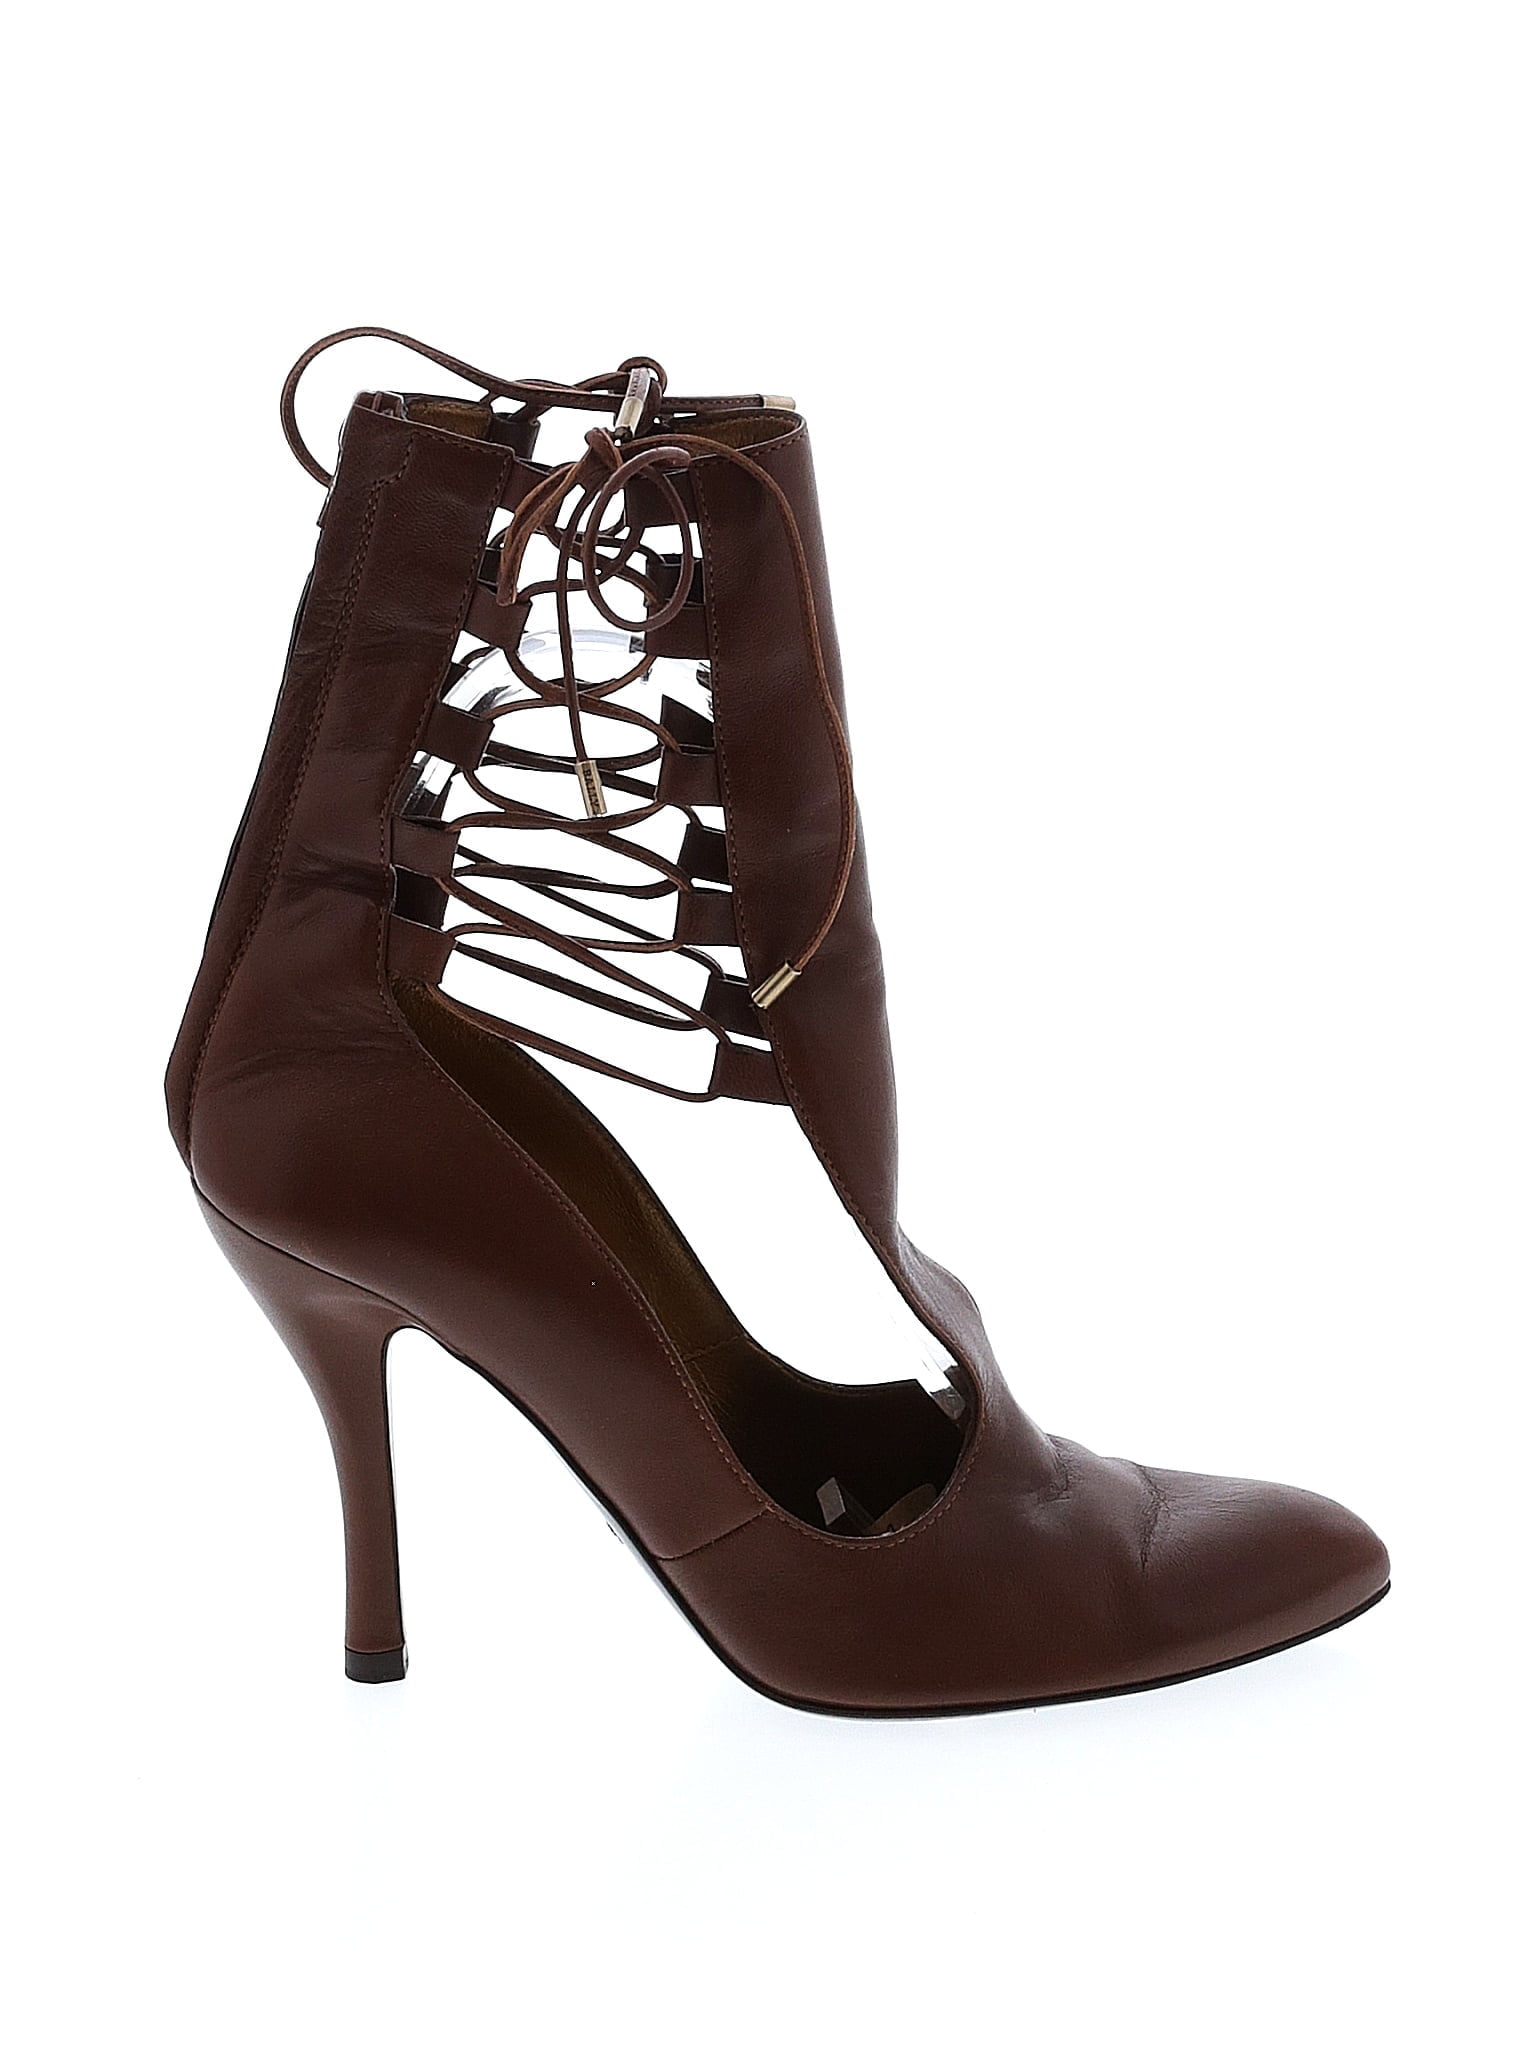 bally leather women heels - Gem